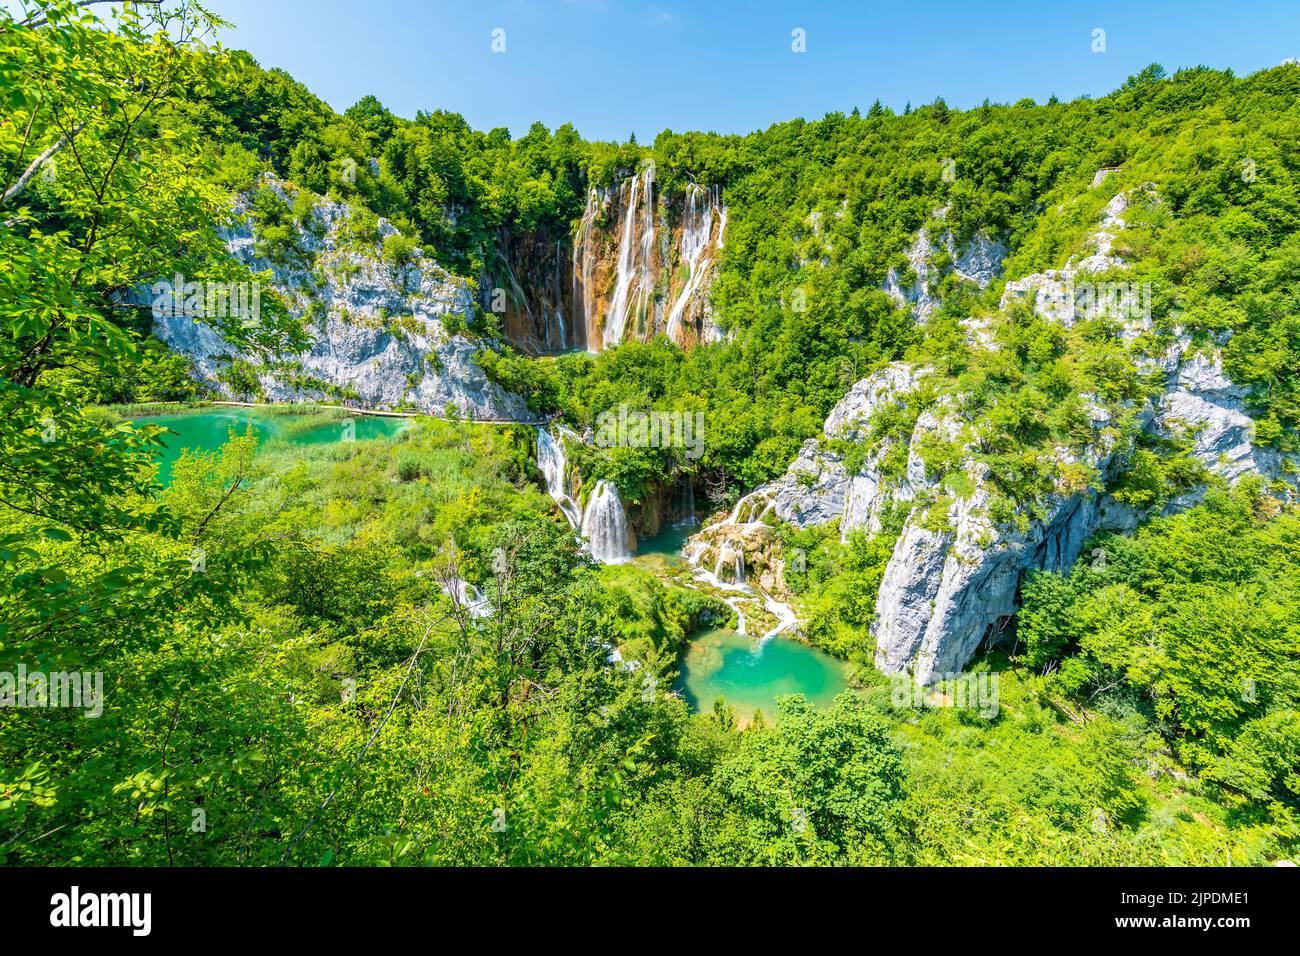 Der größte Wasserfall - Veliki Slap - im Nationalpark Plitvice, Kroatien. Stockfoto